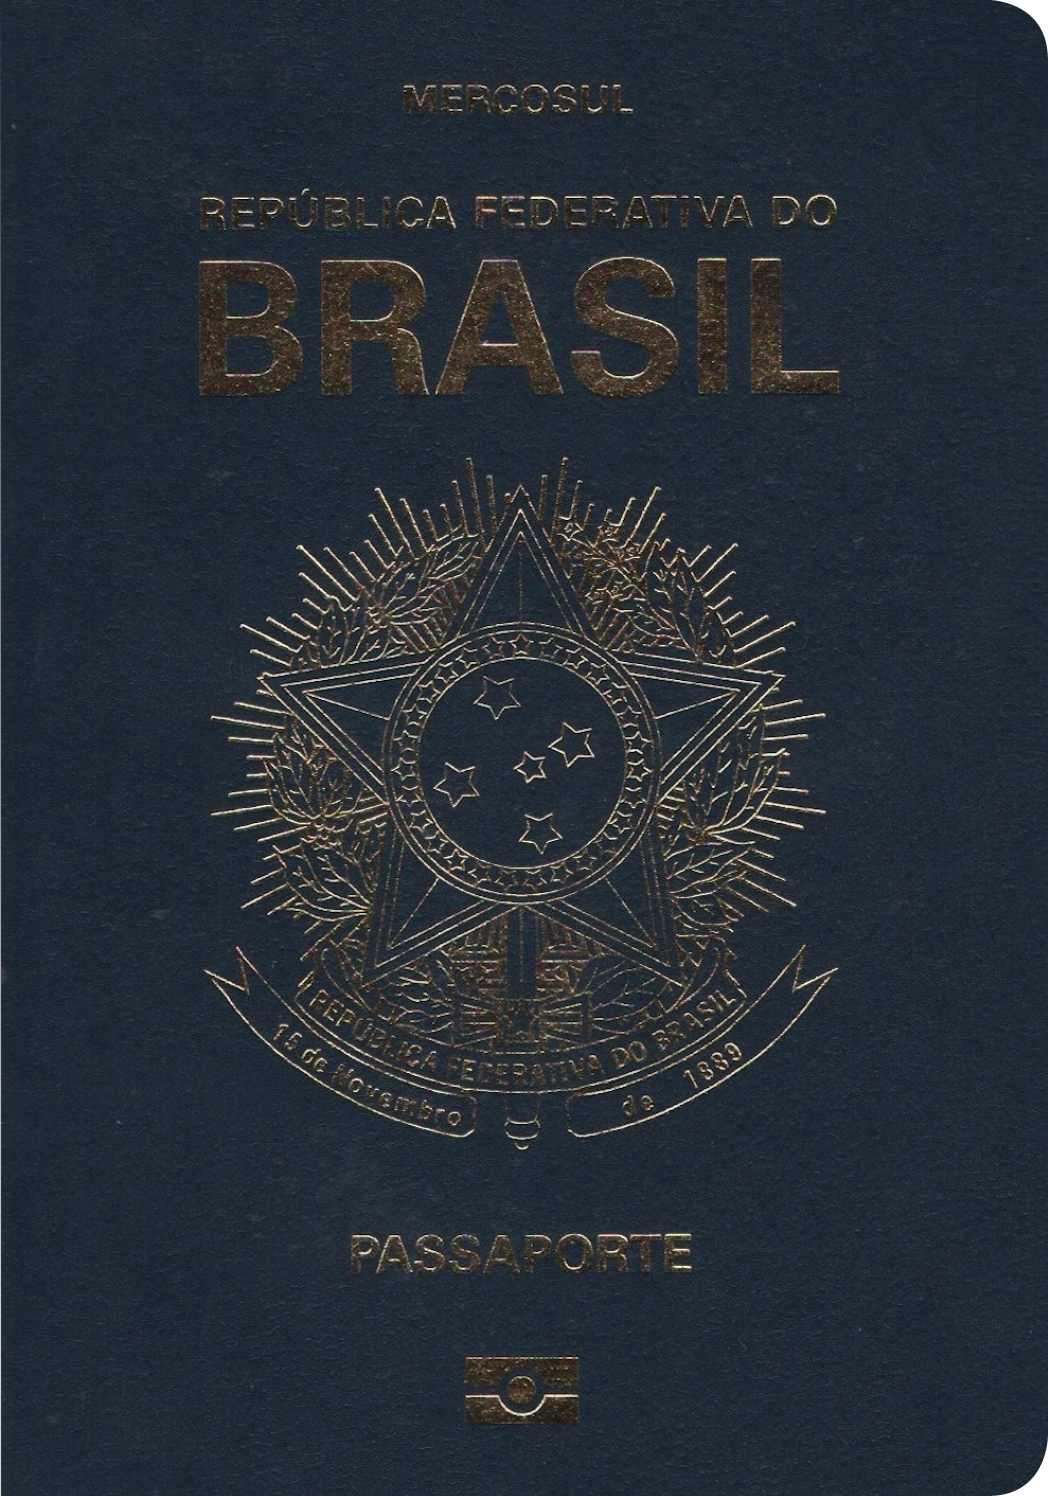 A regular or ordinary Brazilian passport - Front side